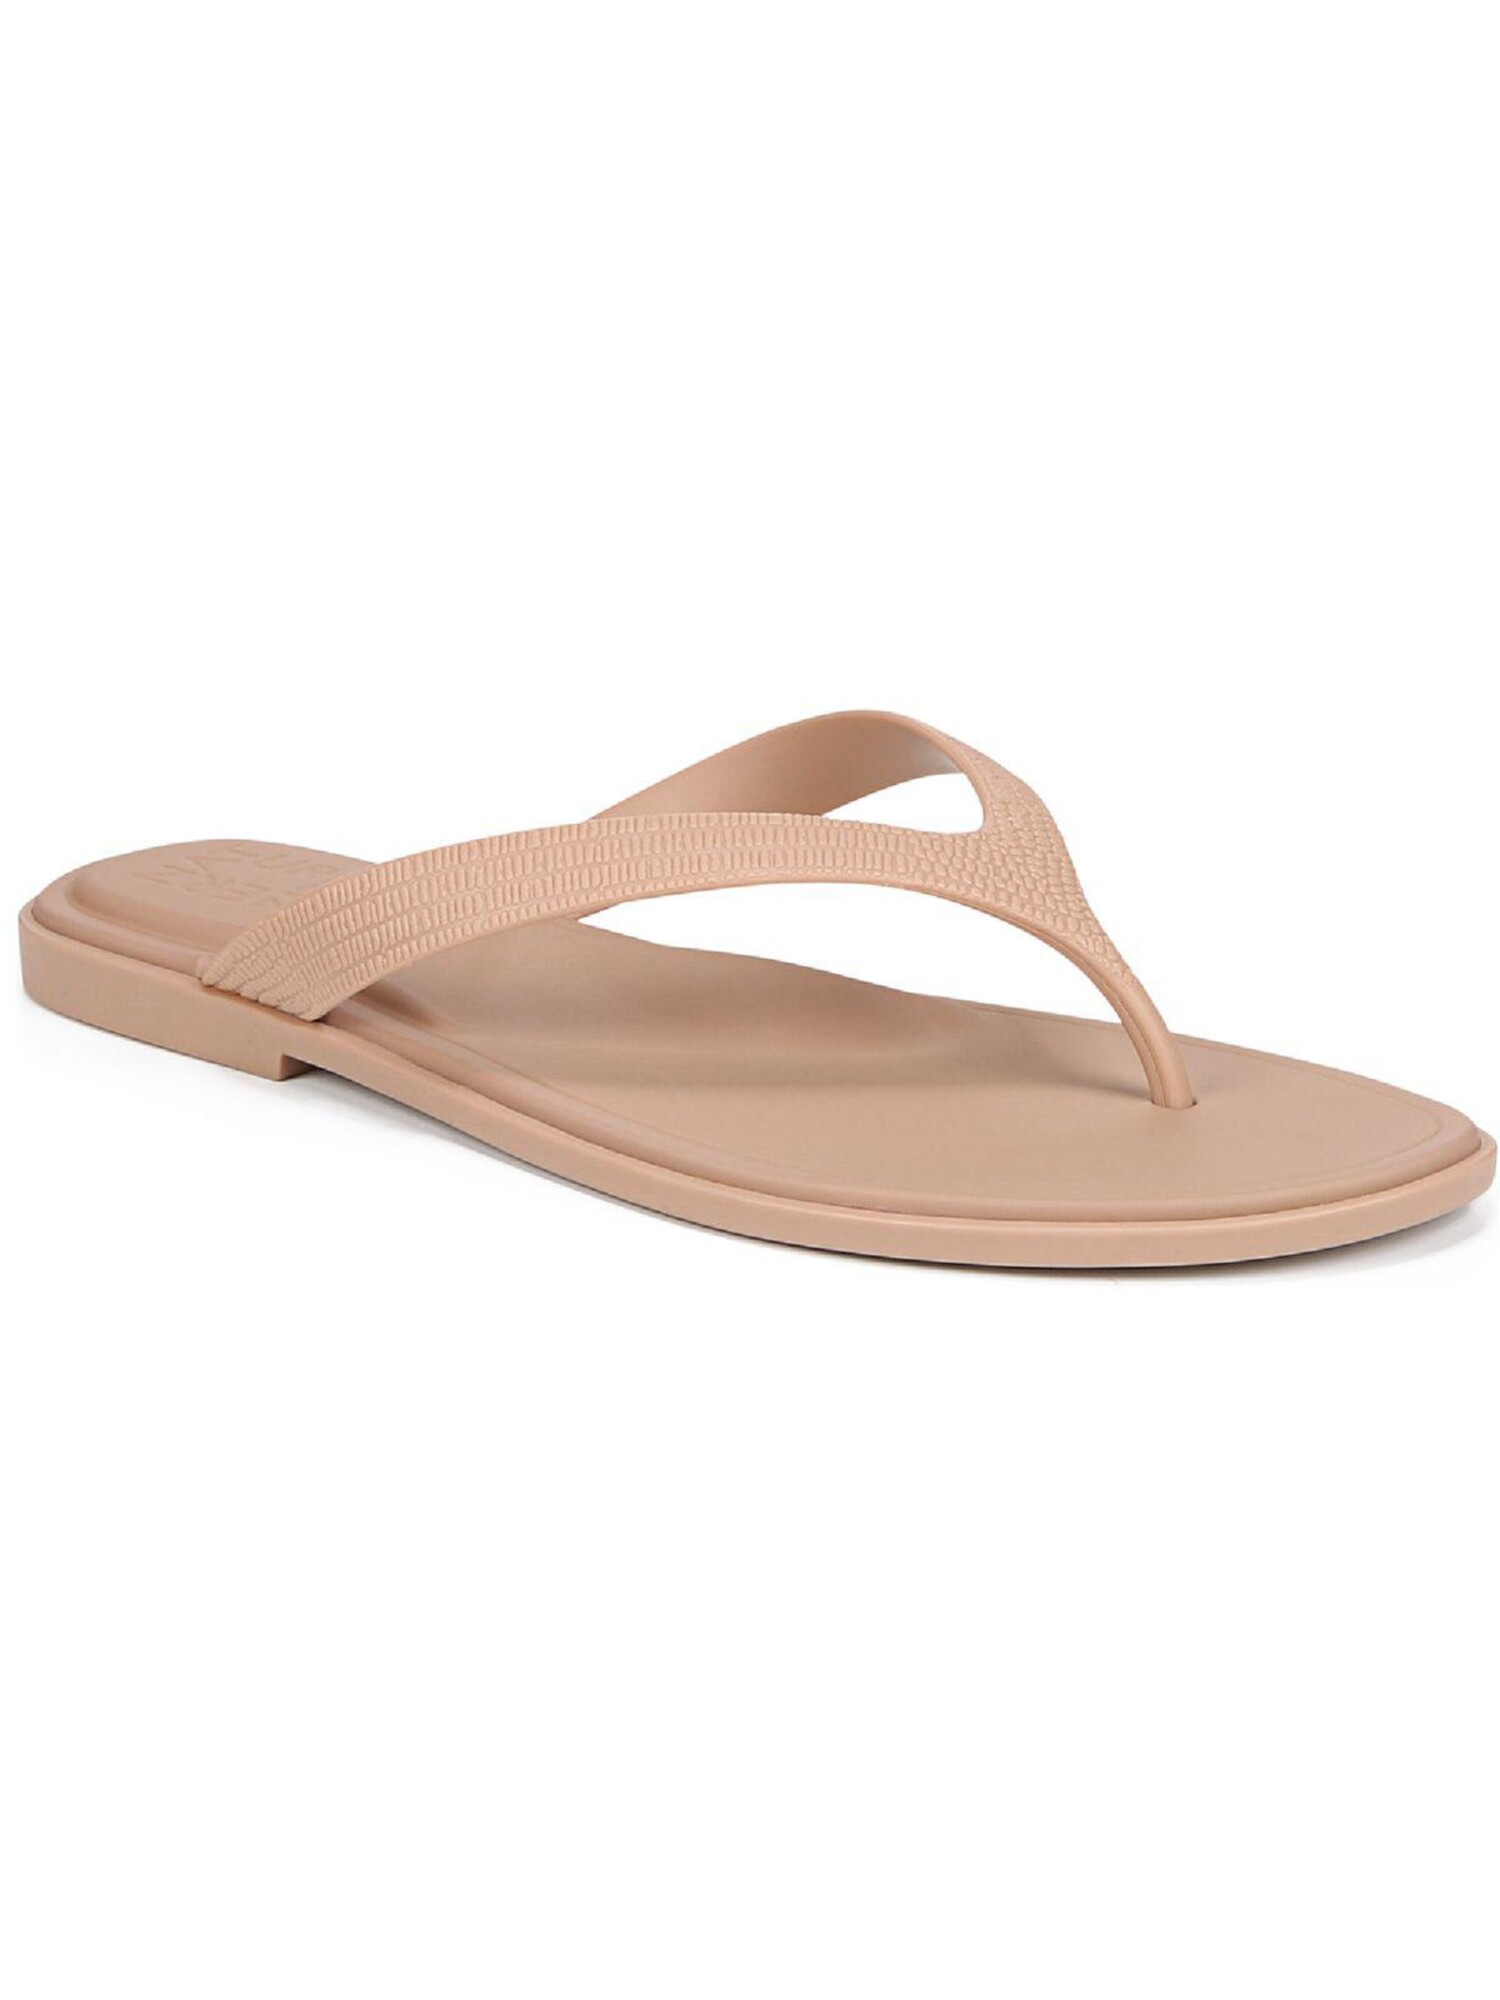 NATURALIZER Womens Beige Comfort Jelly Sandal Padded Non-Slip Jemm Open Toe Slip On Thong Sandals Shoes 7 M